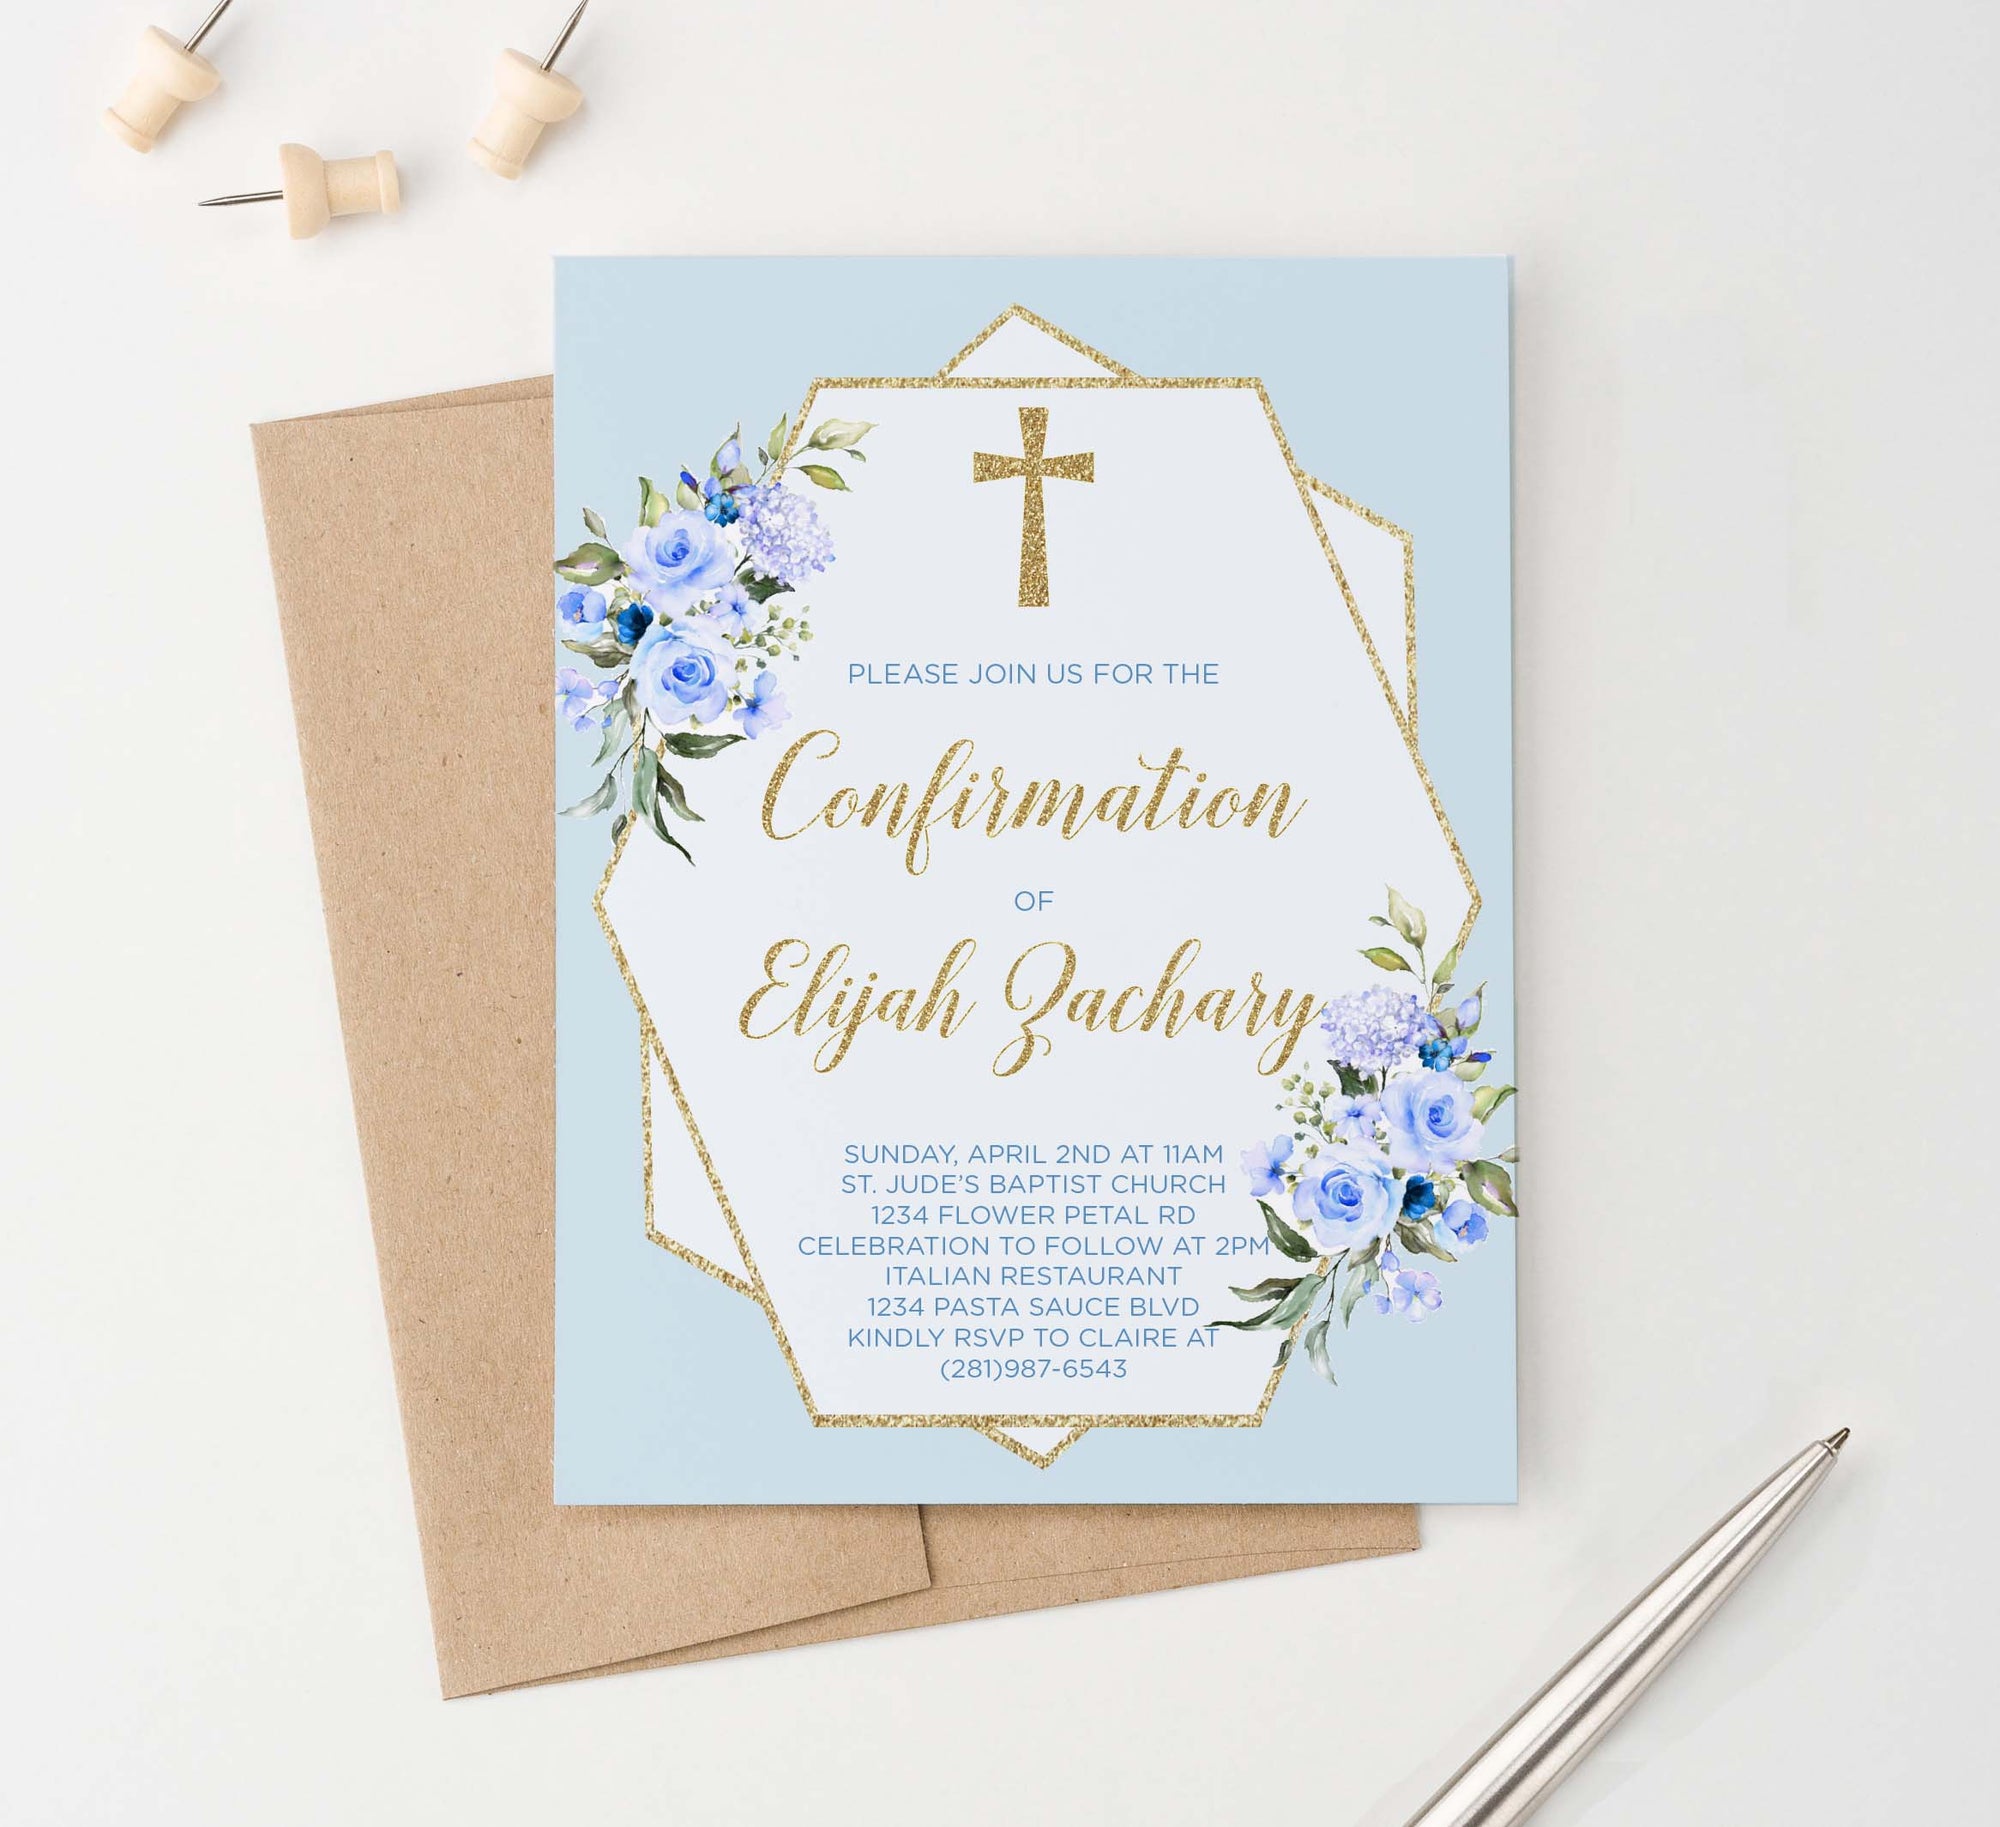 CONI018 elegant blue and gold confirmation invites for boys glitter geometric 1